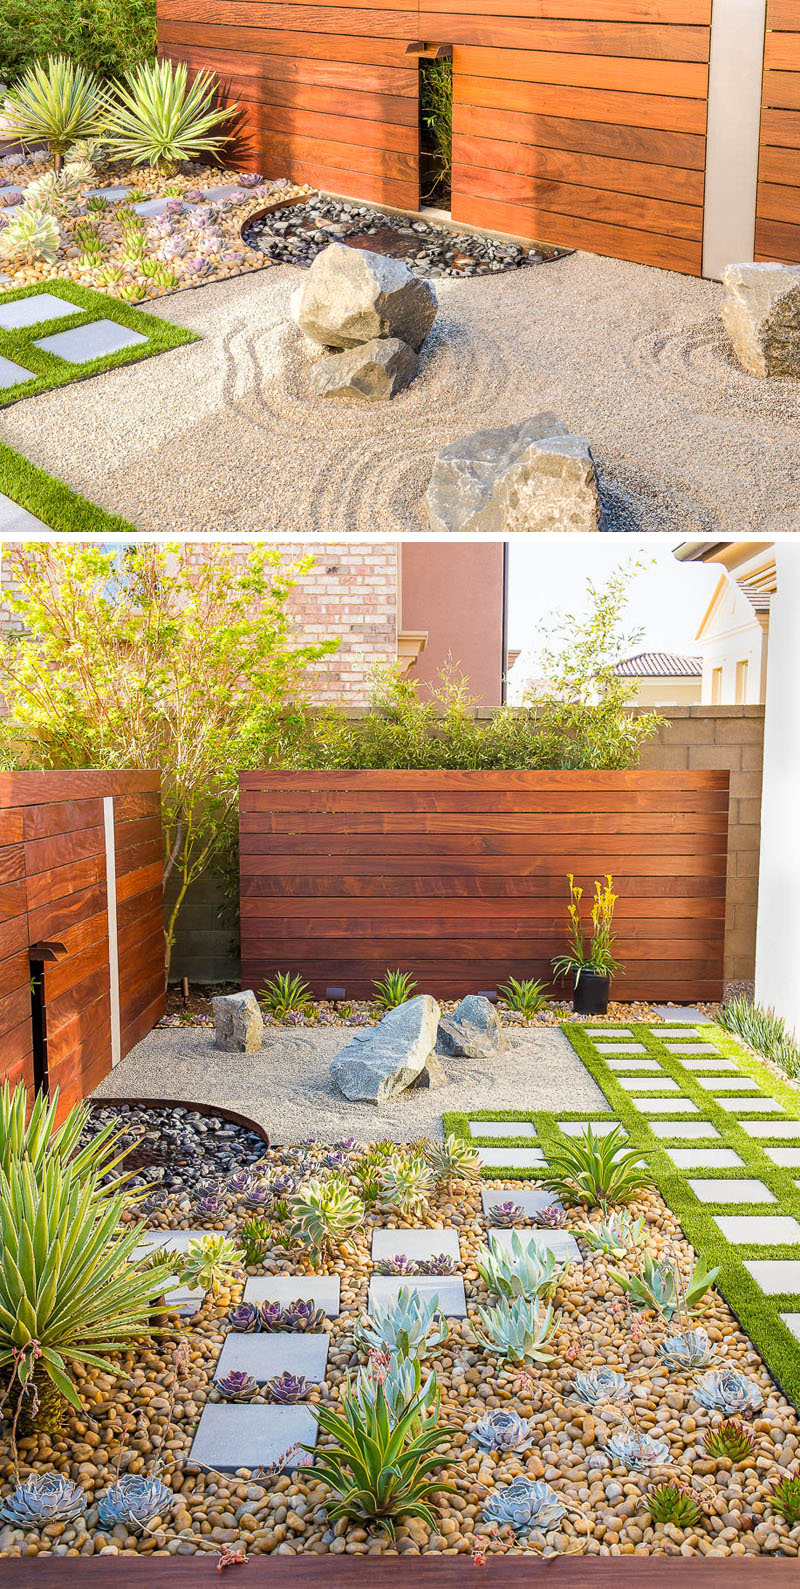 How to Turn Your Backyard into the Perfect Meditation Garden - Japanese Zen Garden, Australian Outdoor Living.